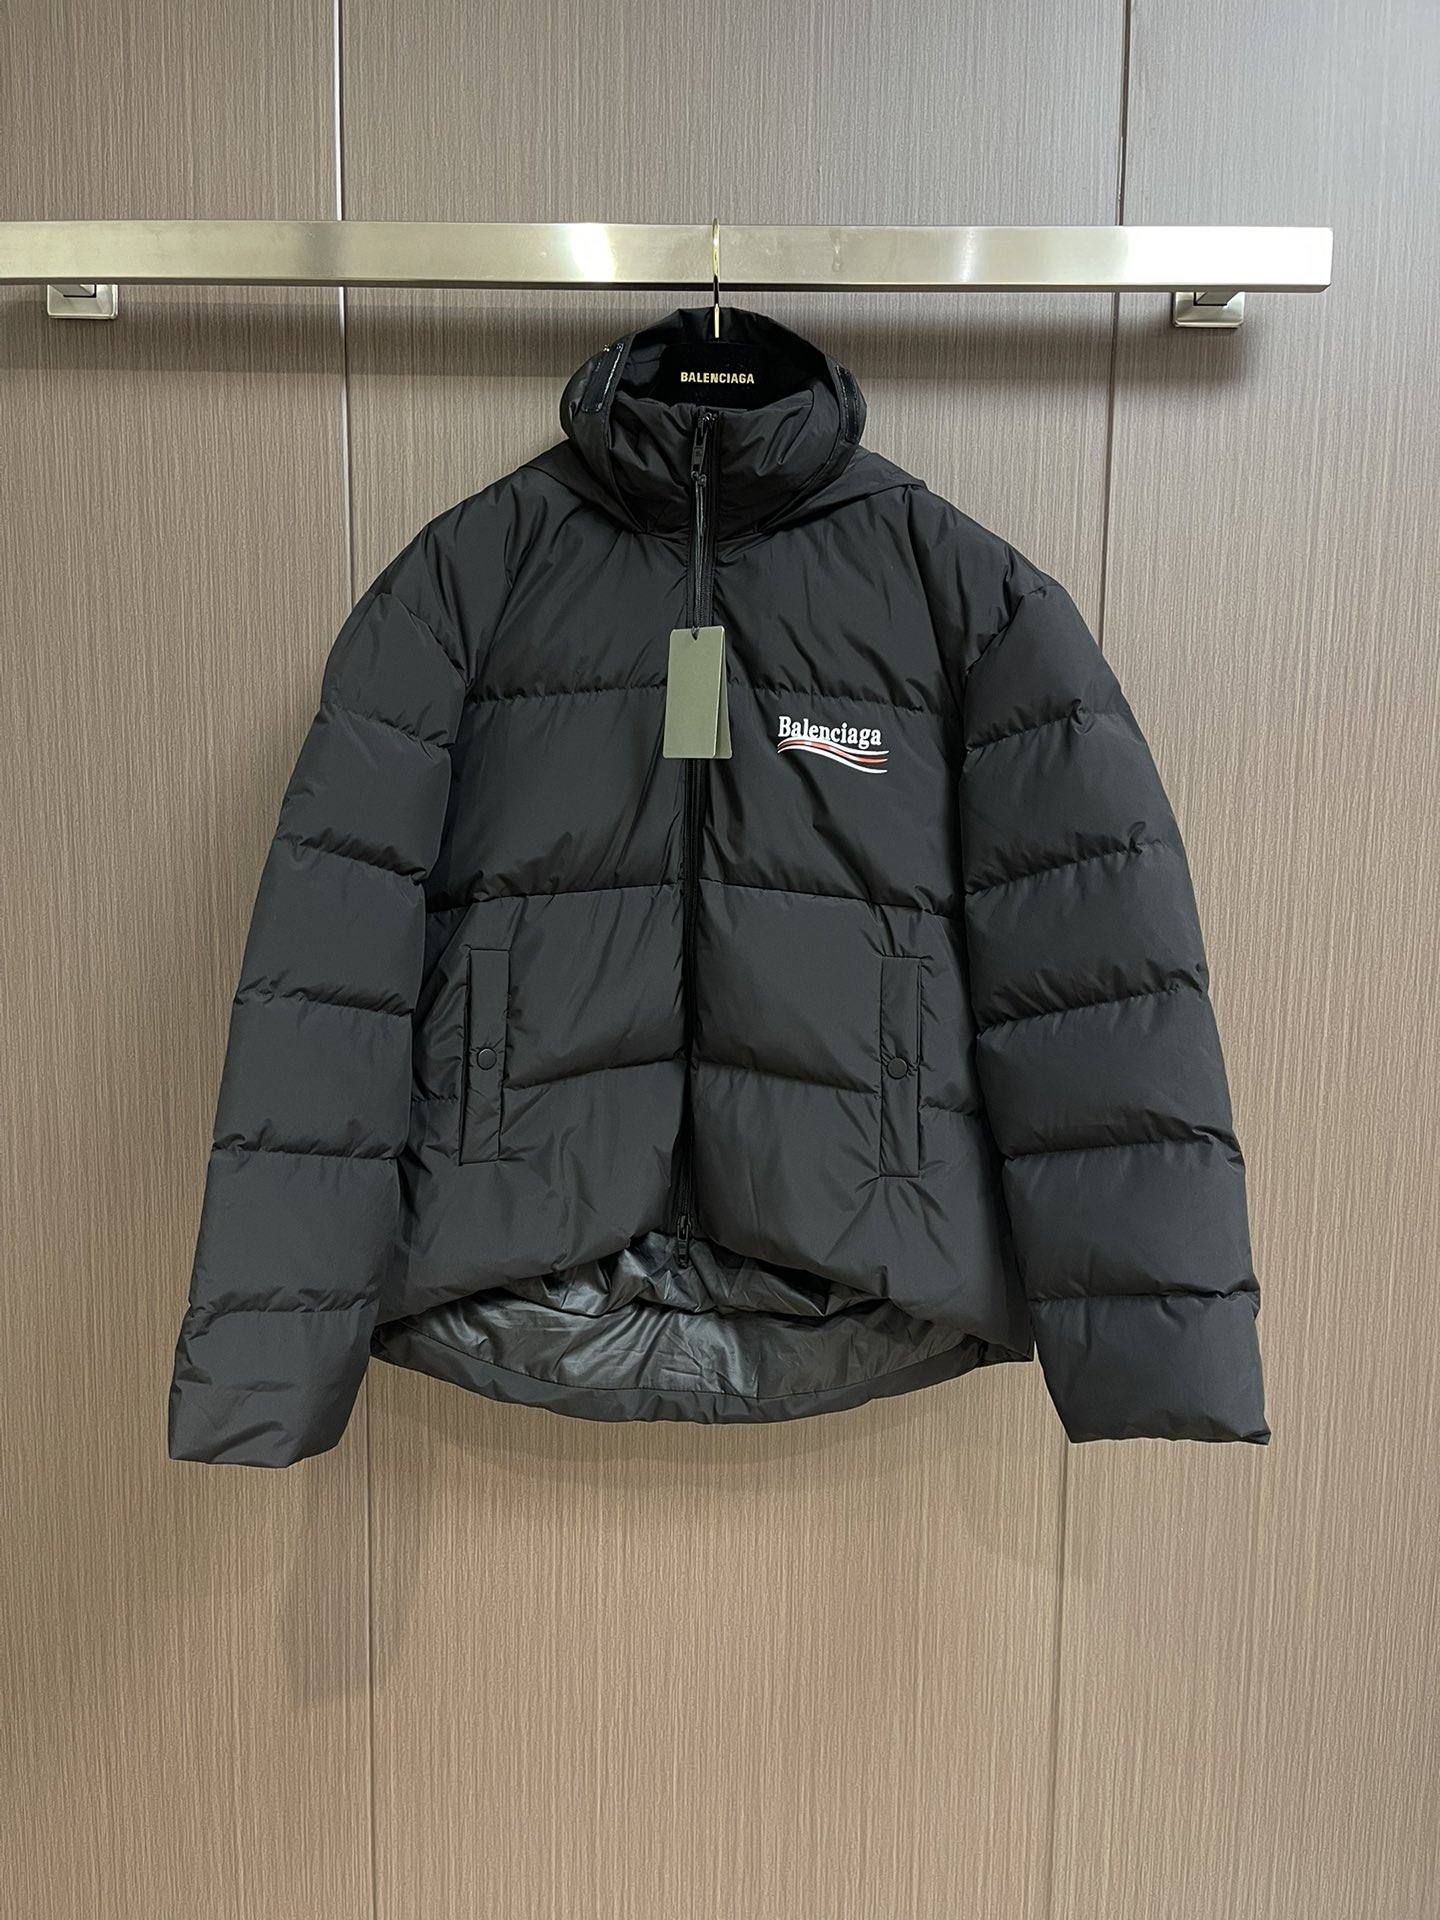 Balenciaga Replica
 Clothing Coats & Jackets Down Jacket Printing Fall/Winter Collection Hooded Top